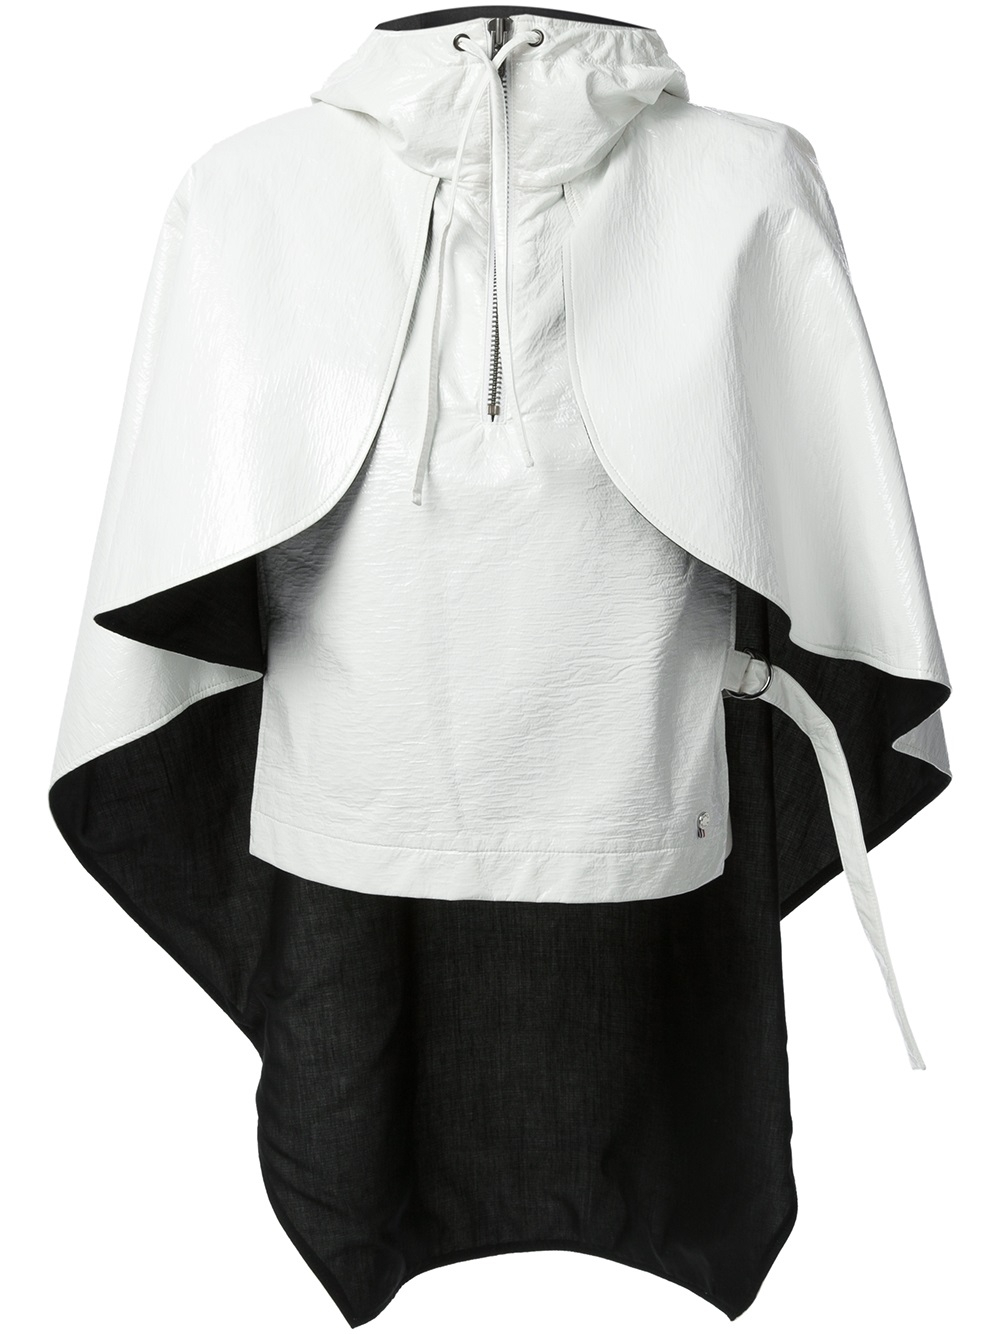 raincoat poncho style, OFF 74%,Buy!